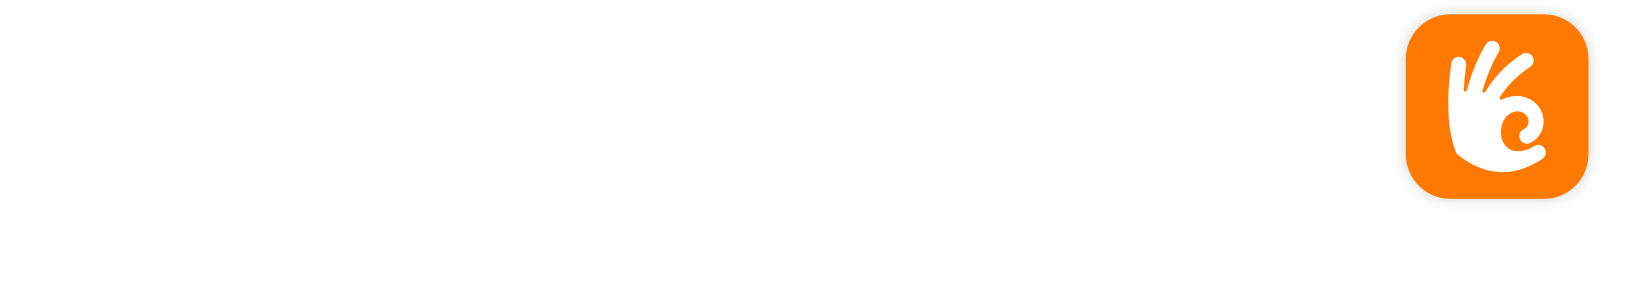 etype logo 